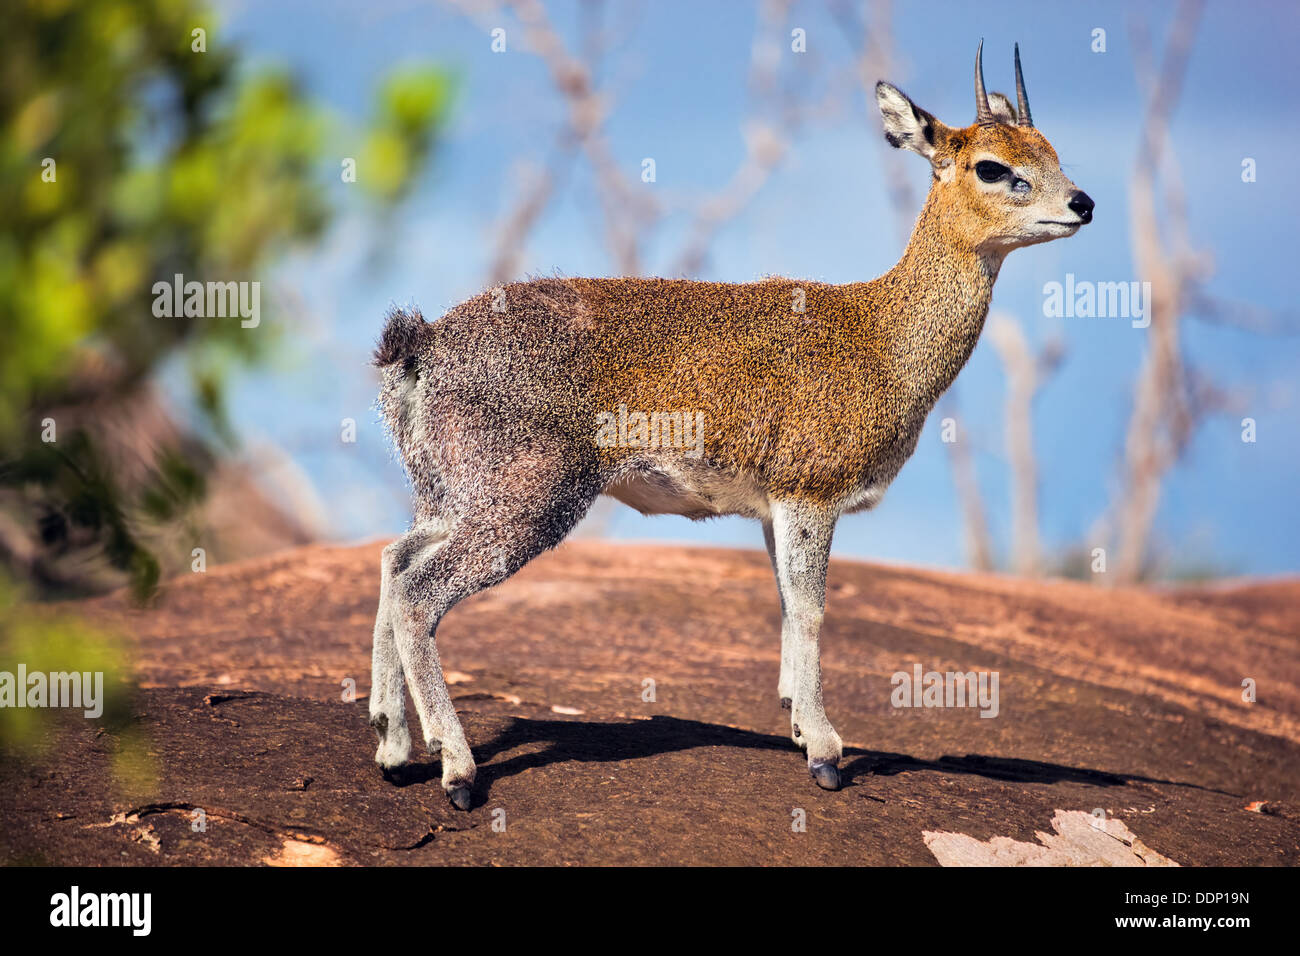 (Oreotragus oreotragus, Klipspringer) une petite antilope d'in The Serengeti, Tanzania, Africa Banque D'Images